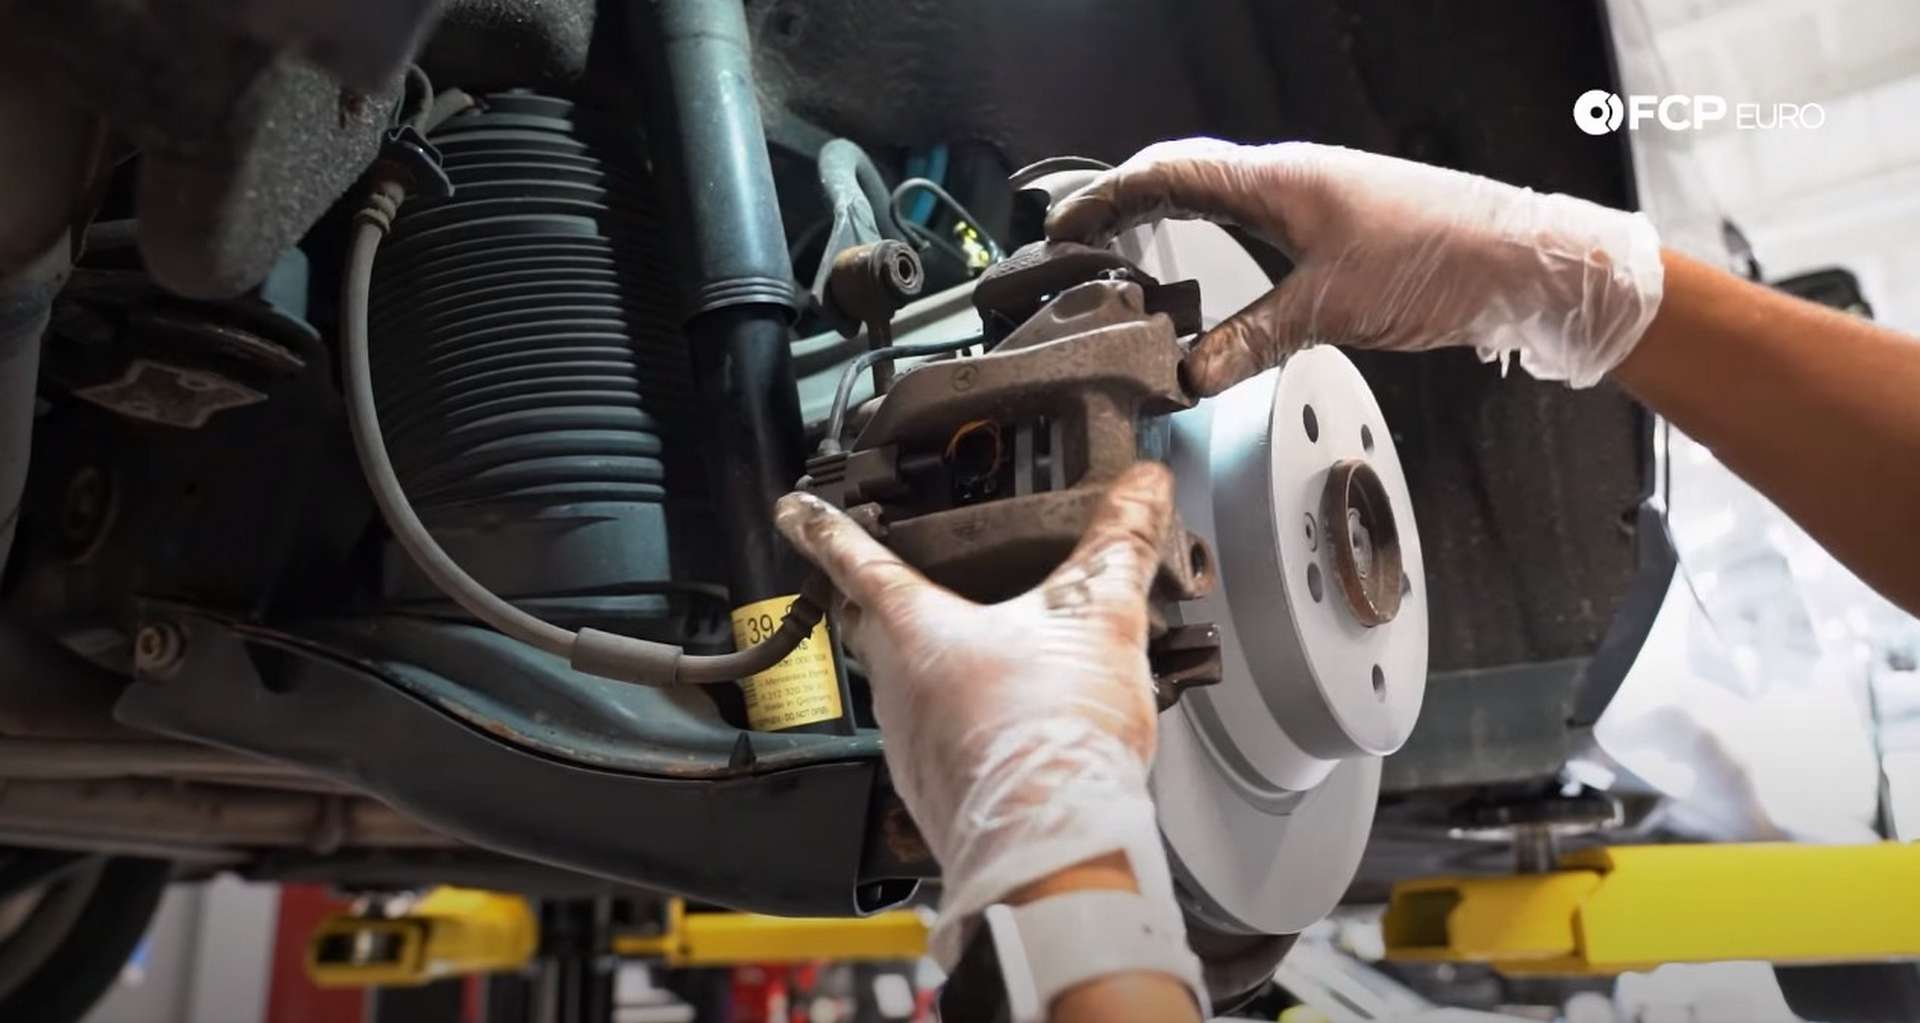 DIY Mercedes W211/212 Rear Brake Job installing the caliper